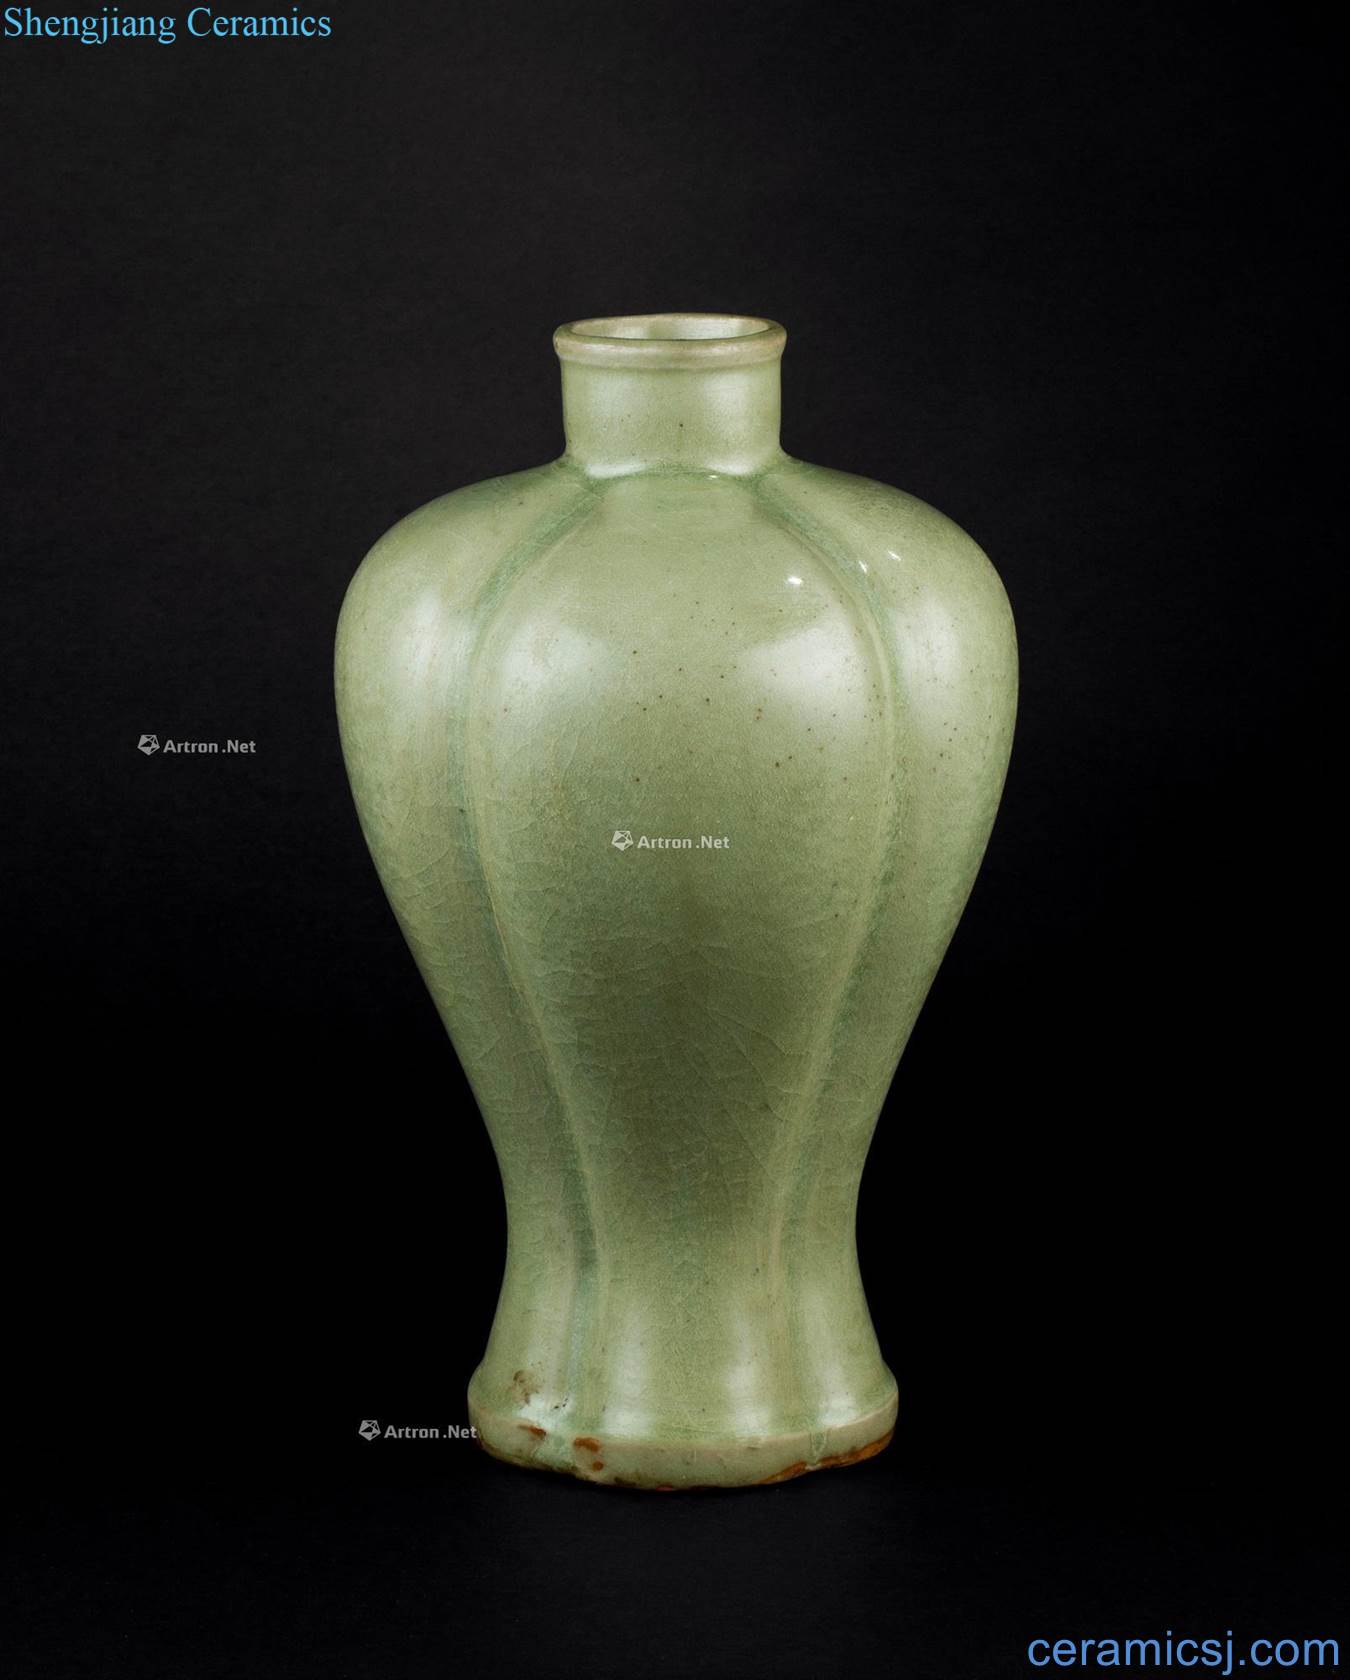 The yuan dynasty, Ming dynasty (1368-1644) celadon melon shape bottle